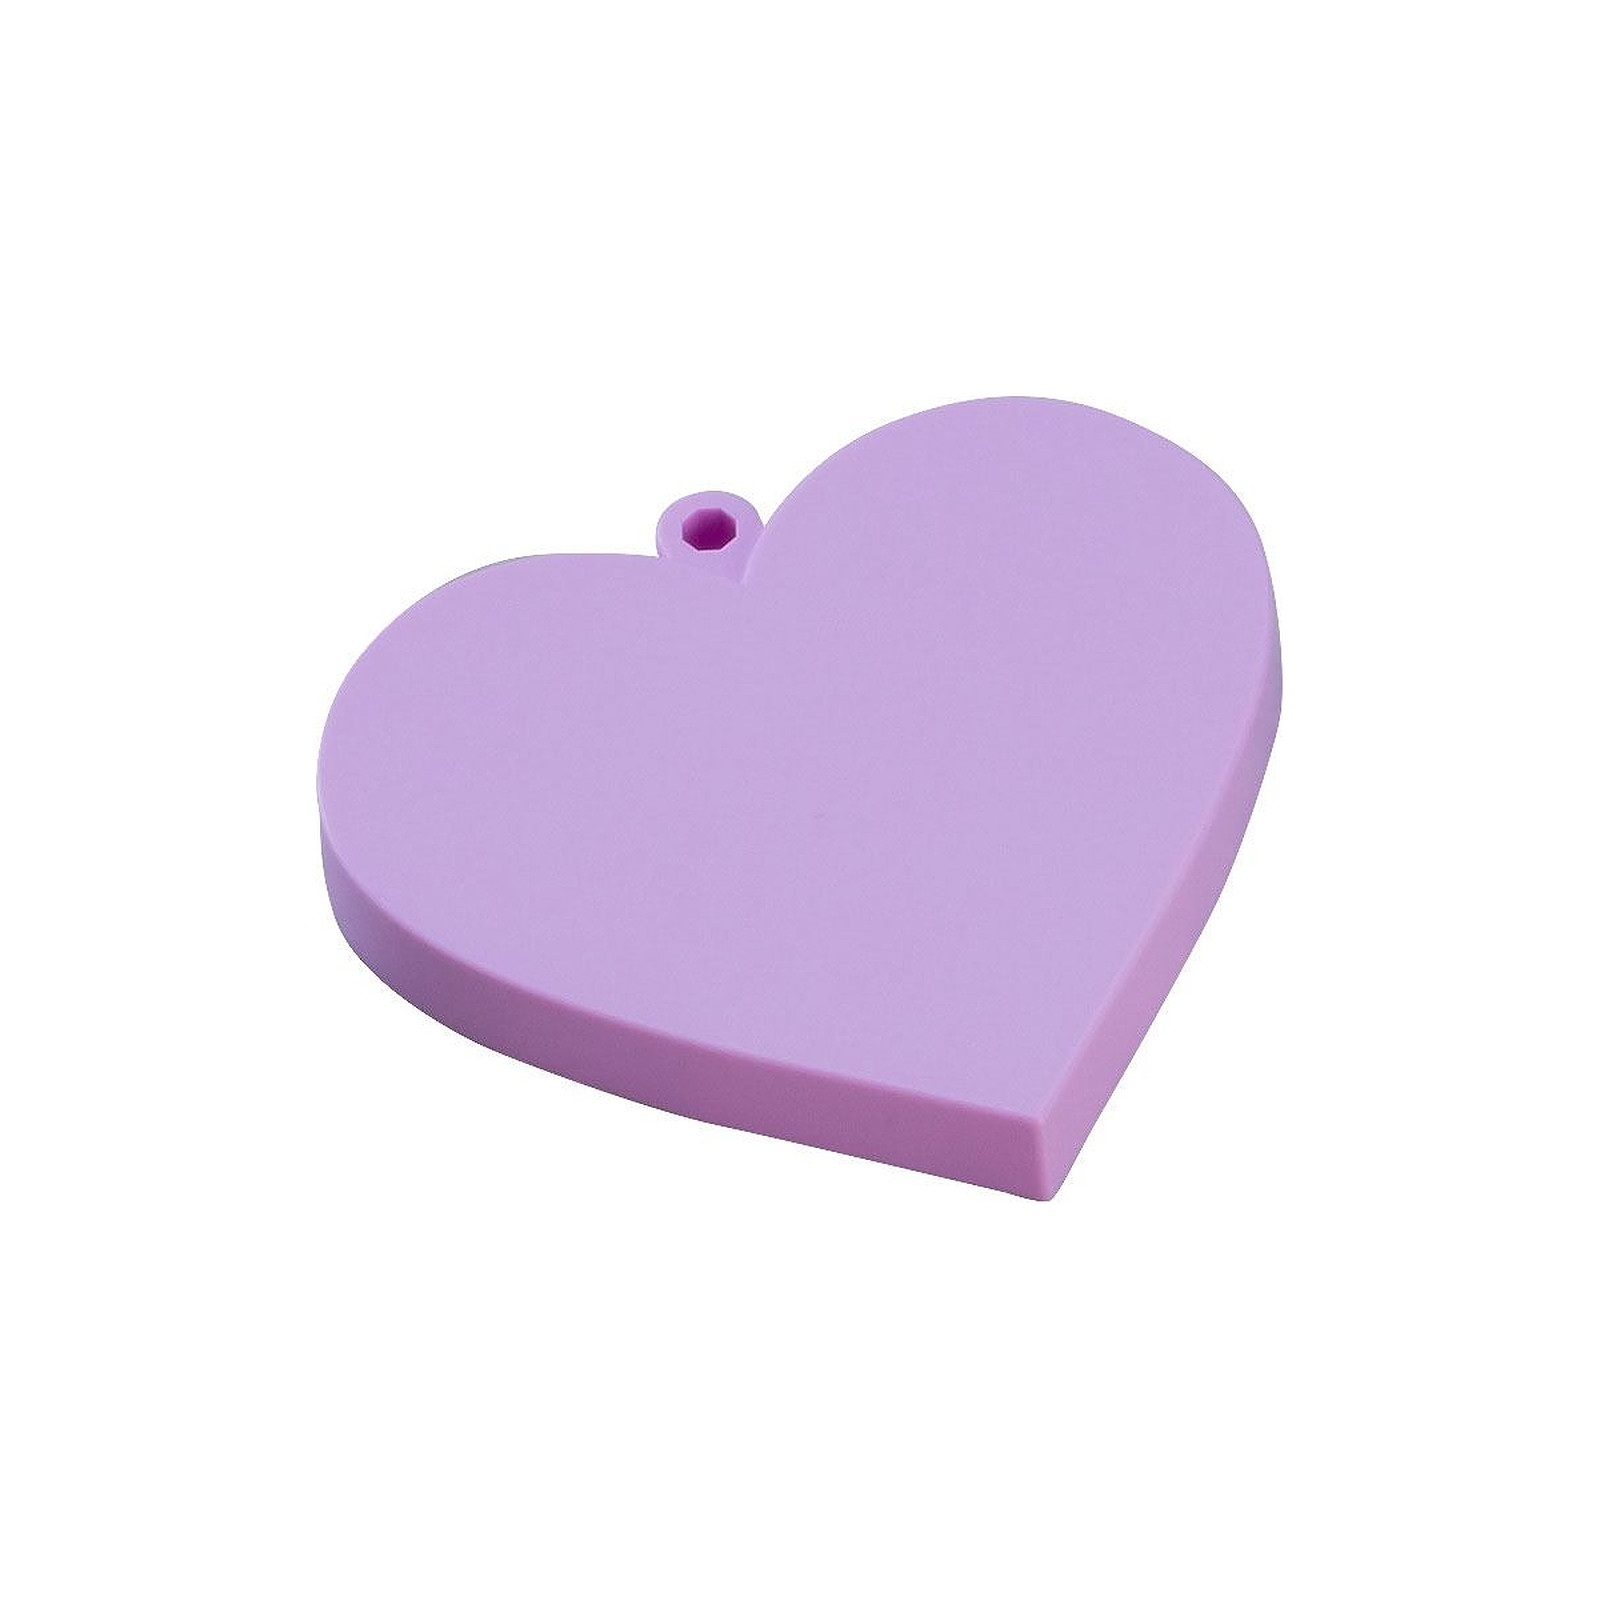 Nendoroid More - Socle pour figurines Nendoroid Heart Purple Version - Figurines Good Smile Company